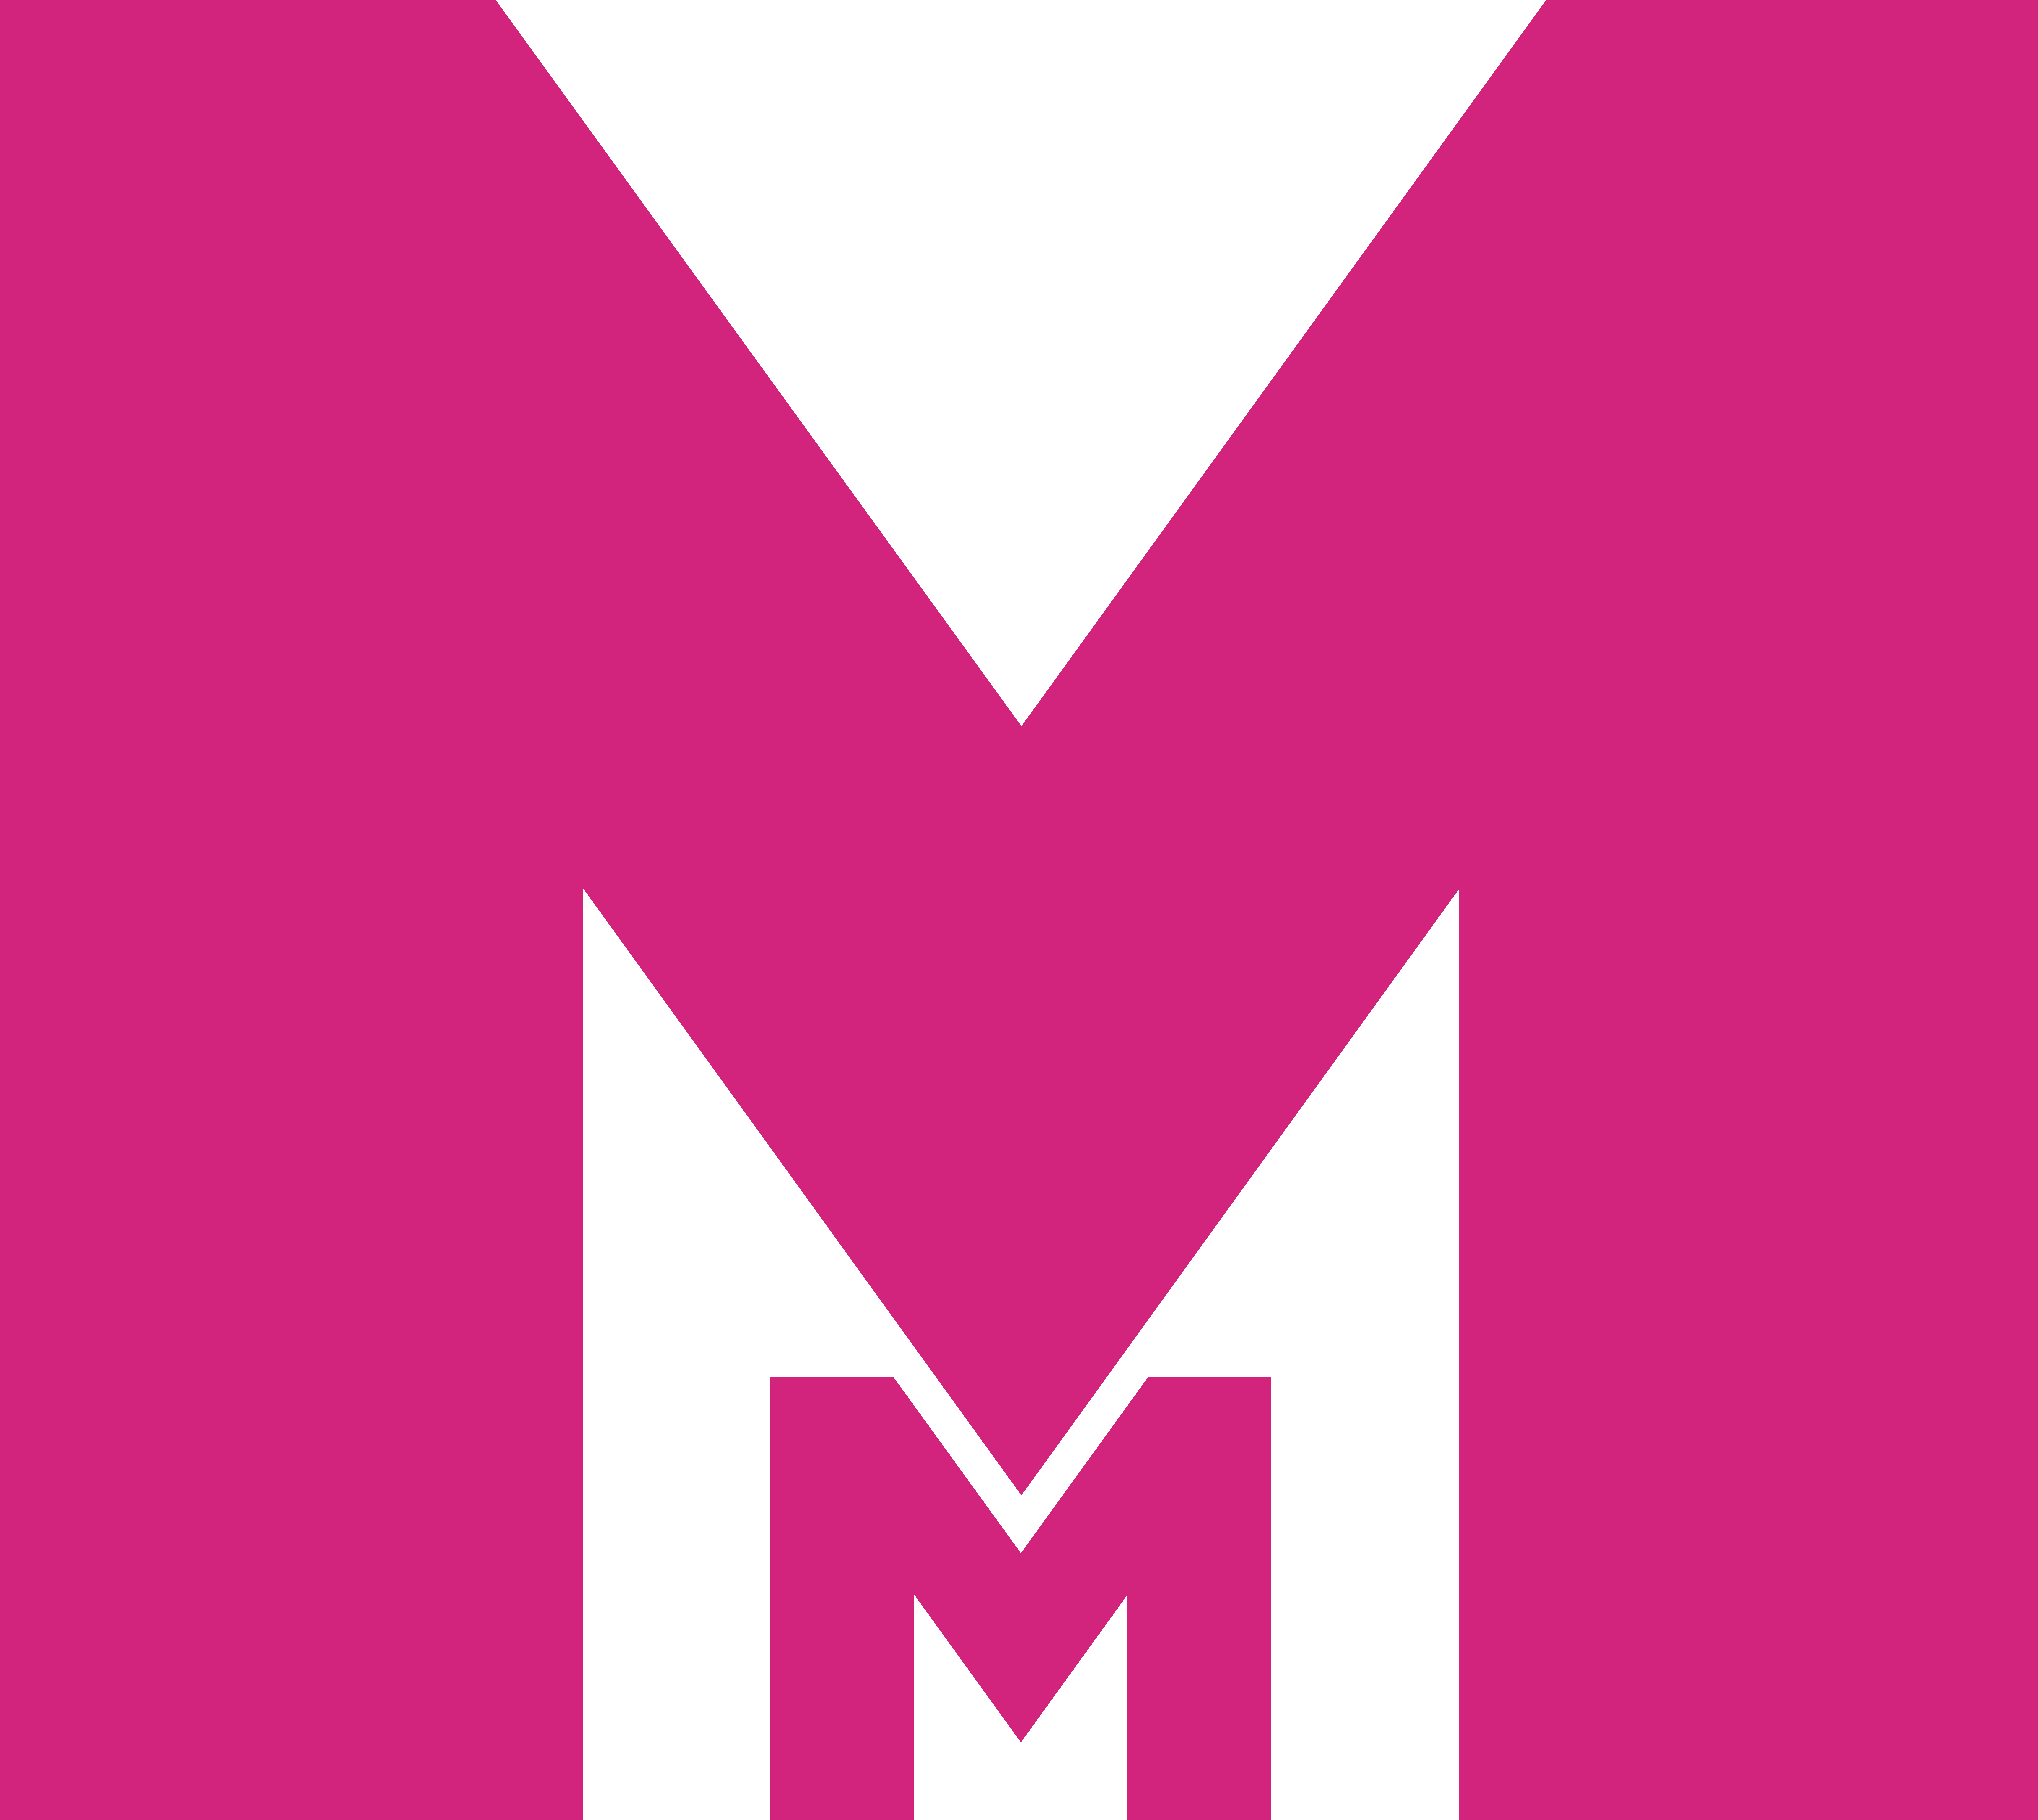 MM Magazine